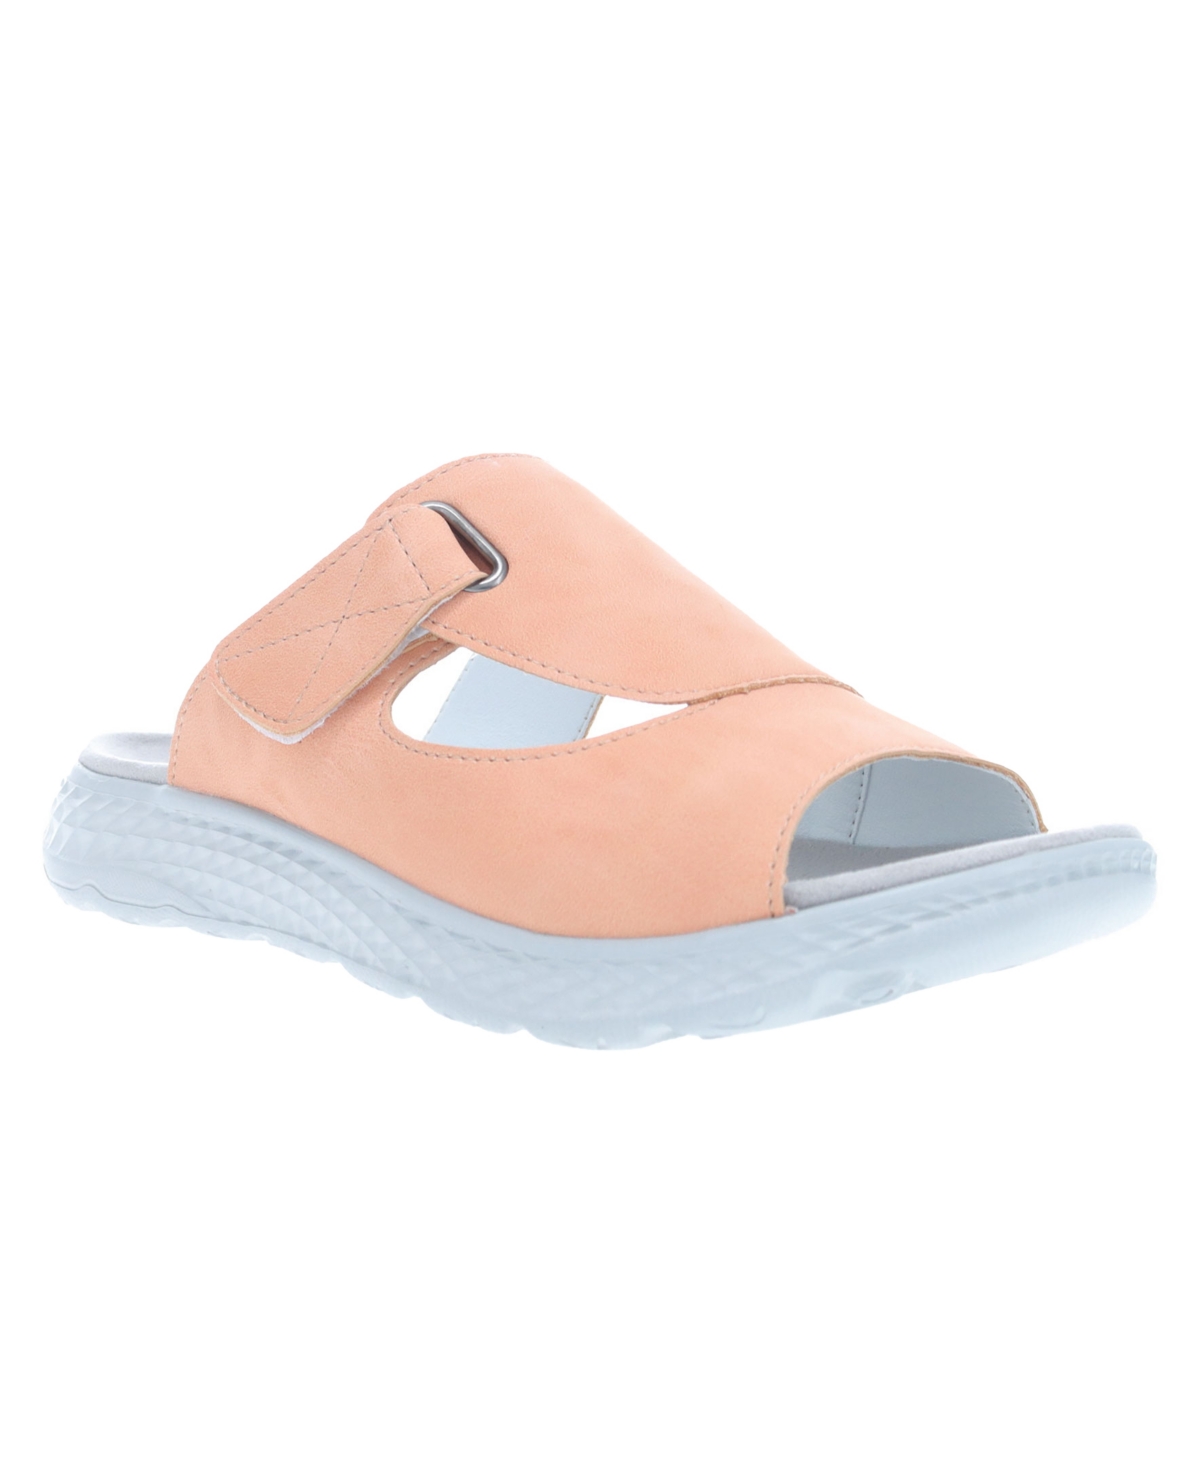 Women's Travelactiv Sedona Slide Sandals - Apricot